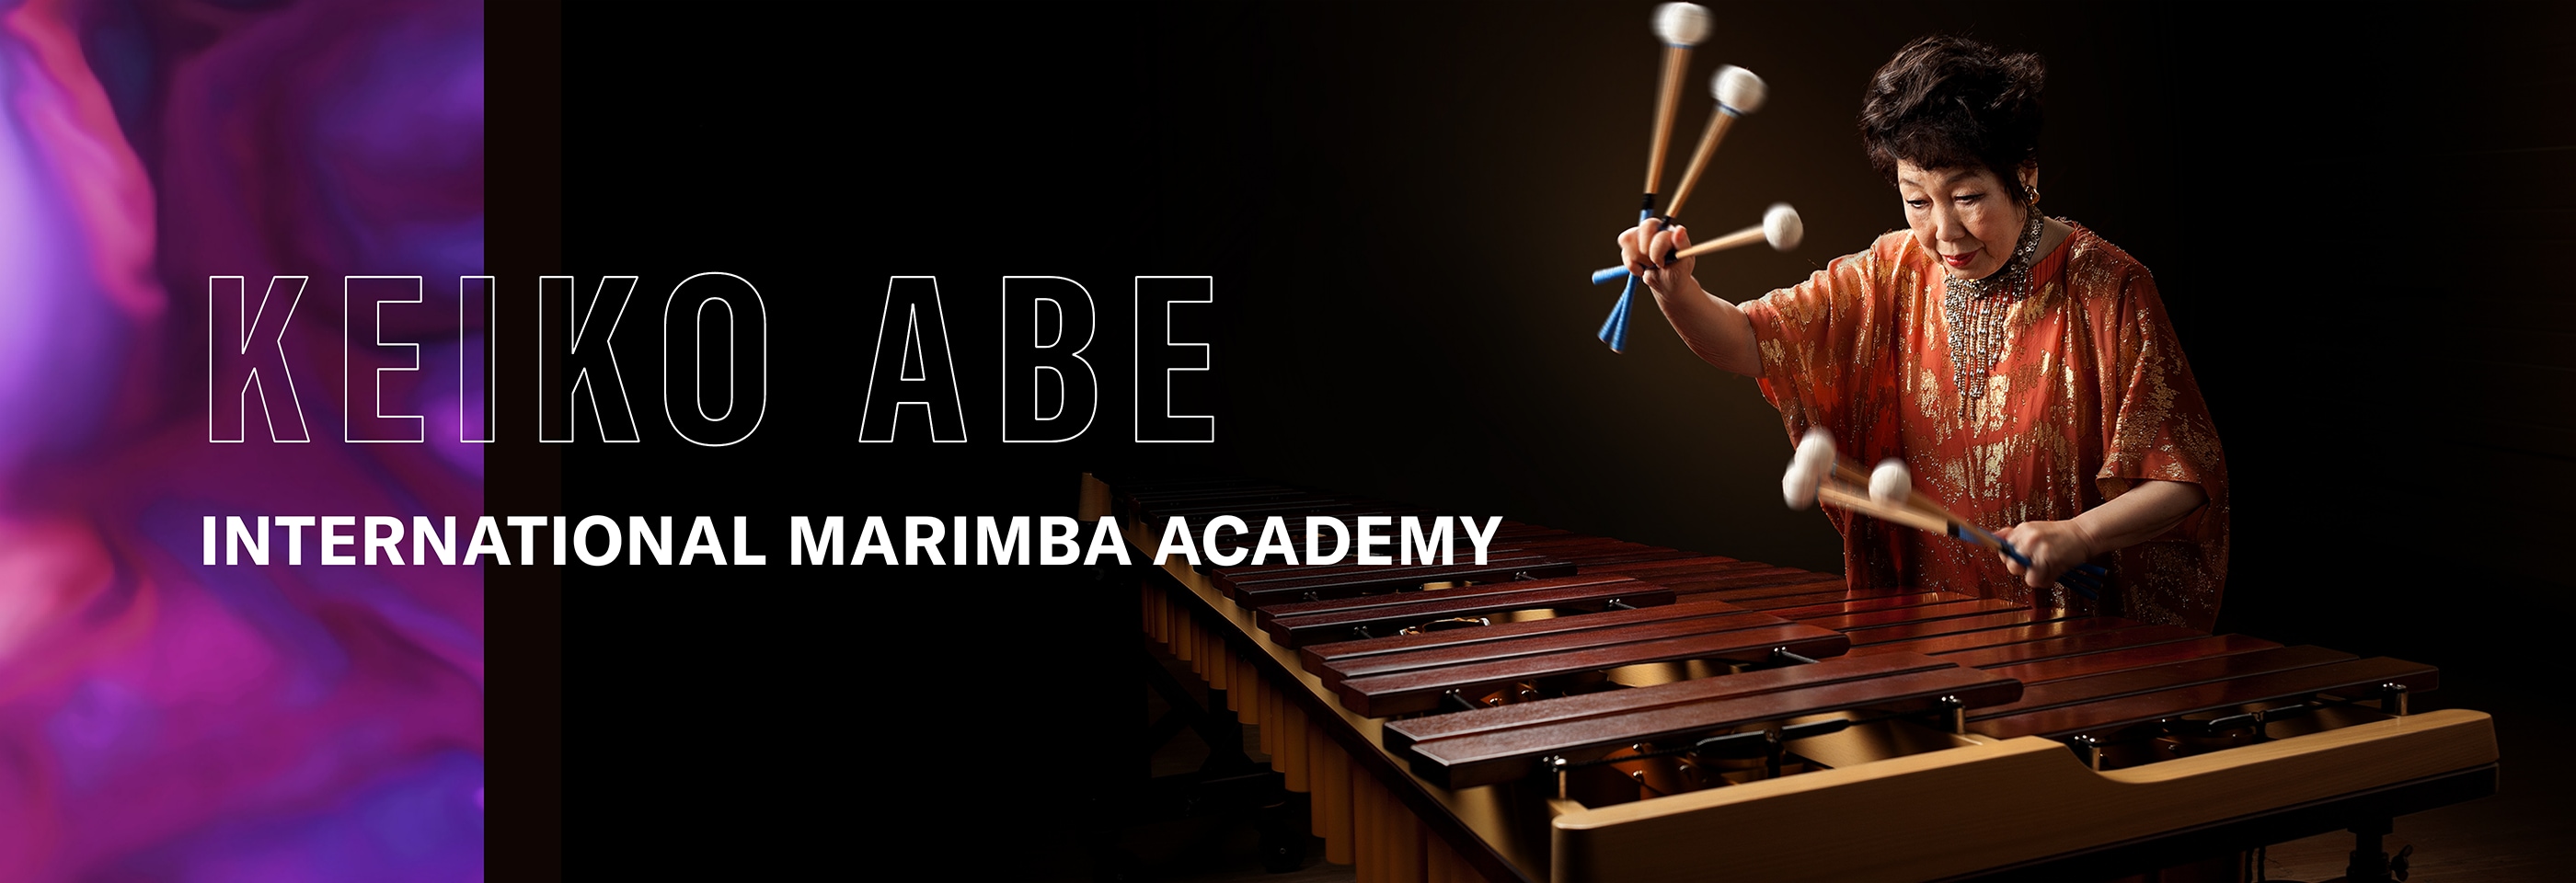 Keiko Abe International Marimba Academy